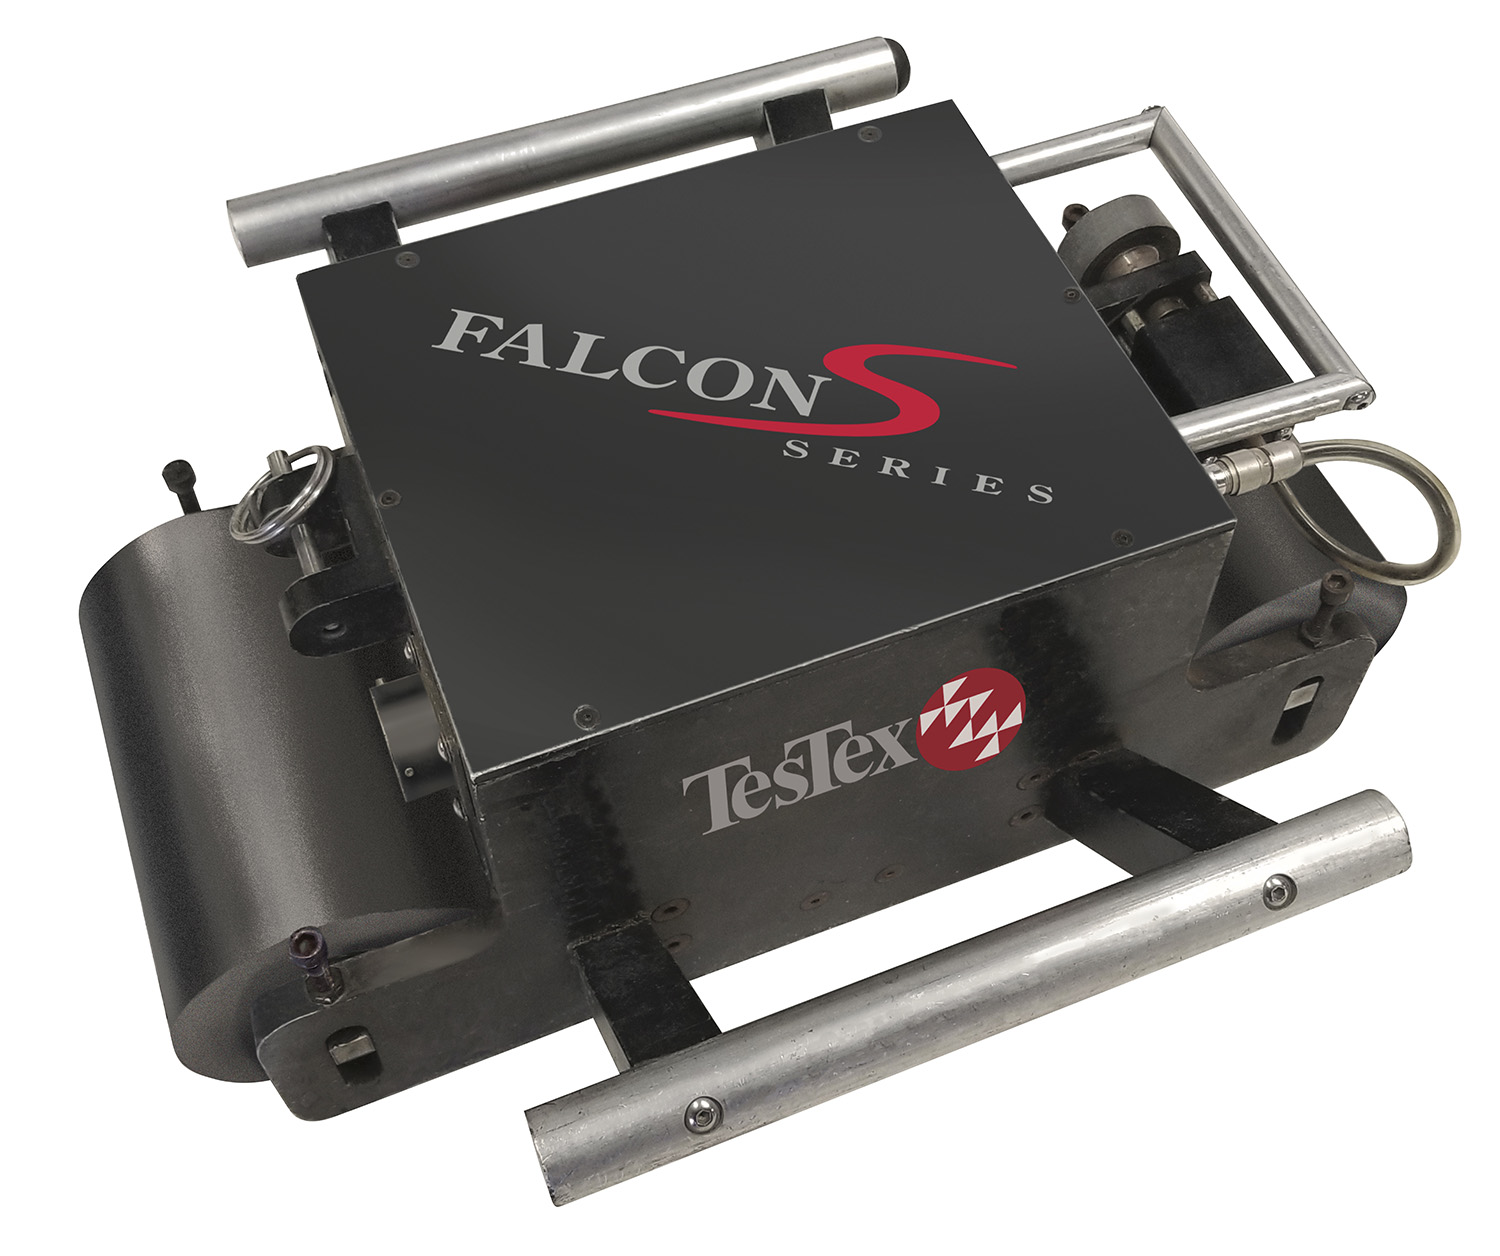 Falcon S Series Junior Scanner